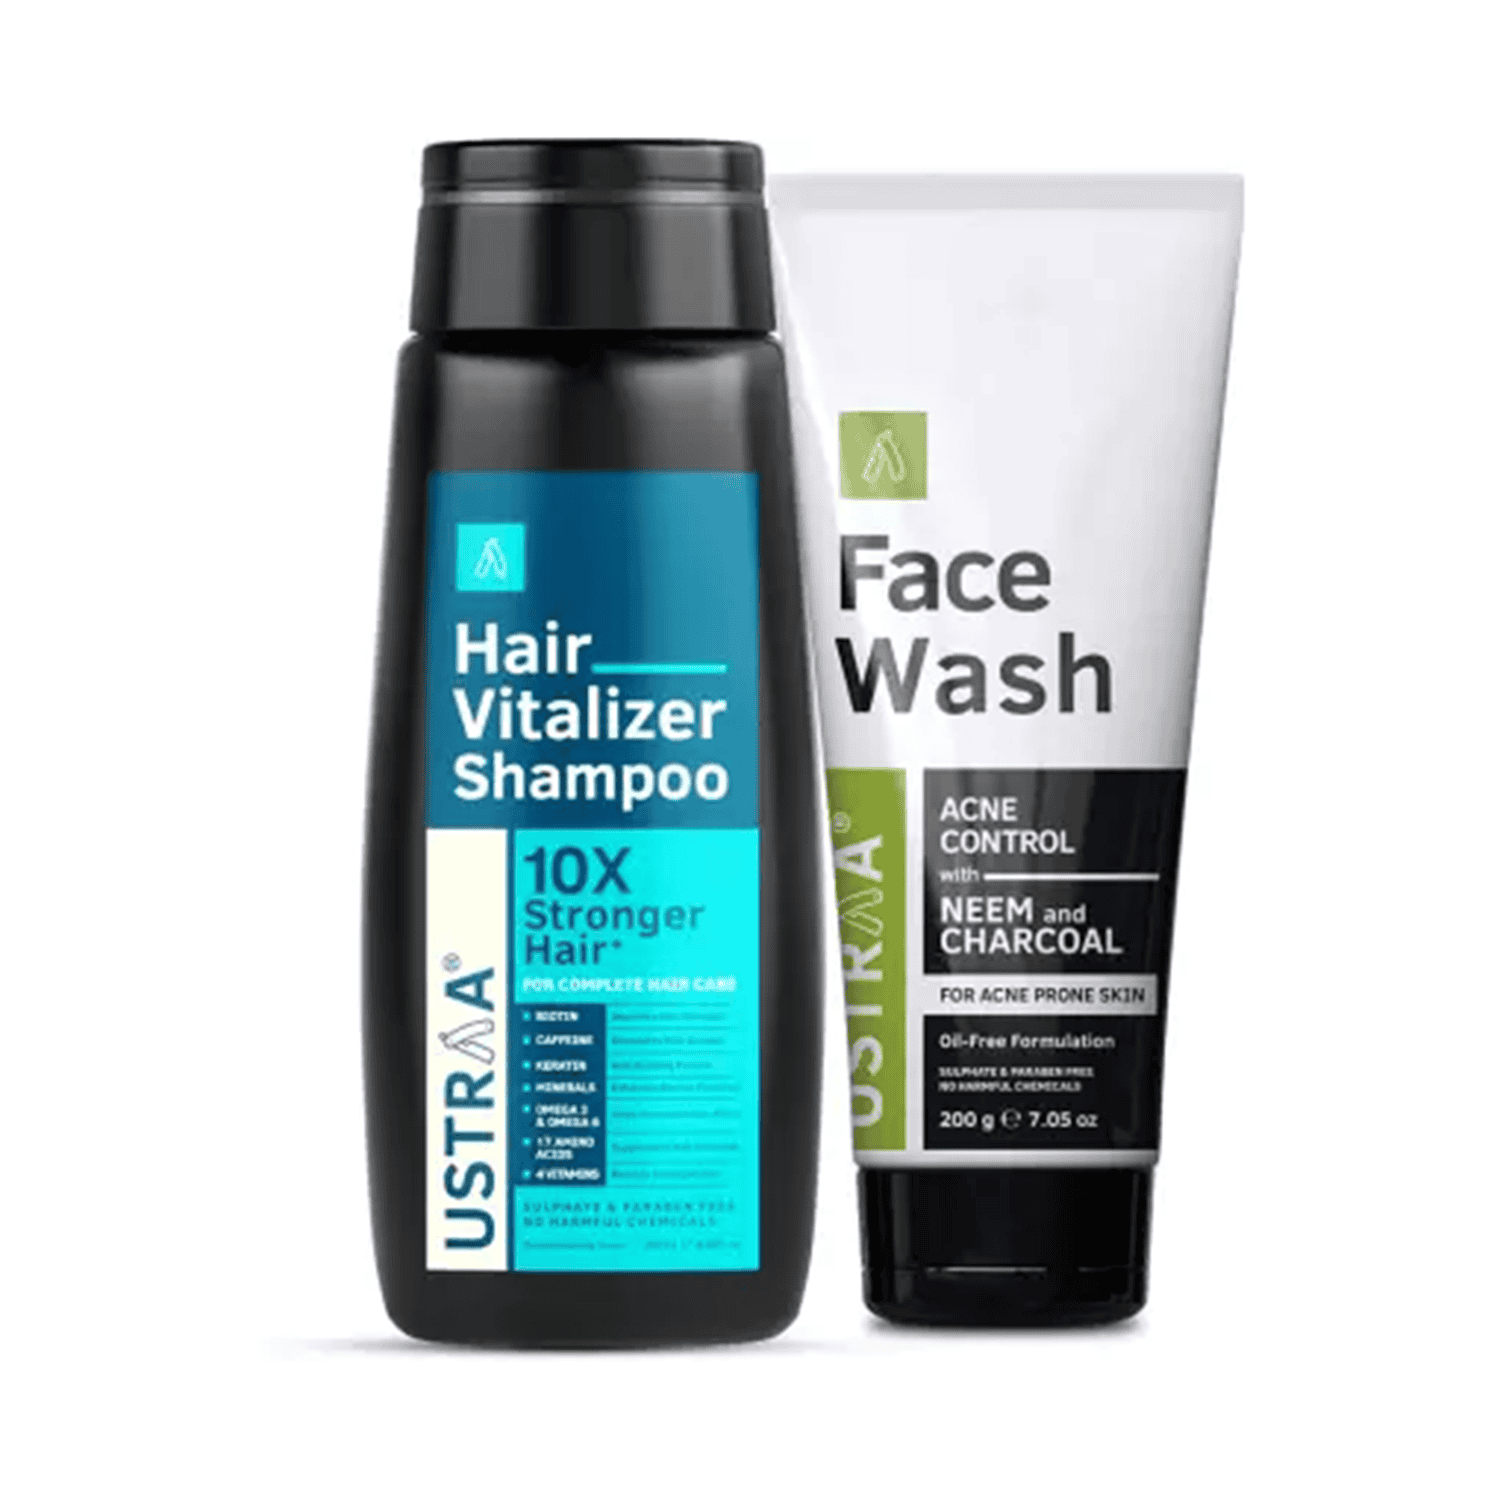 Ustraa | Ustraa Hair Vitalizer Shampoo & Neem-charcoal Face Wash Combo